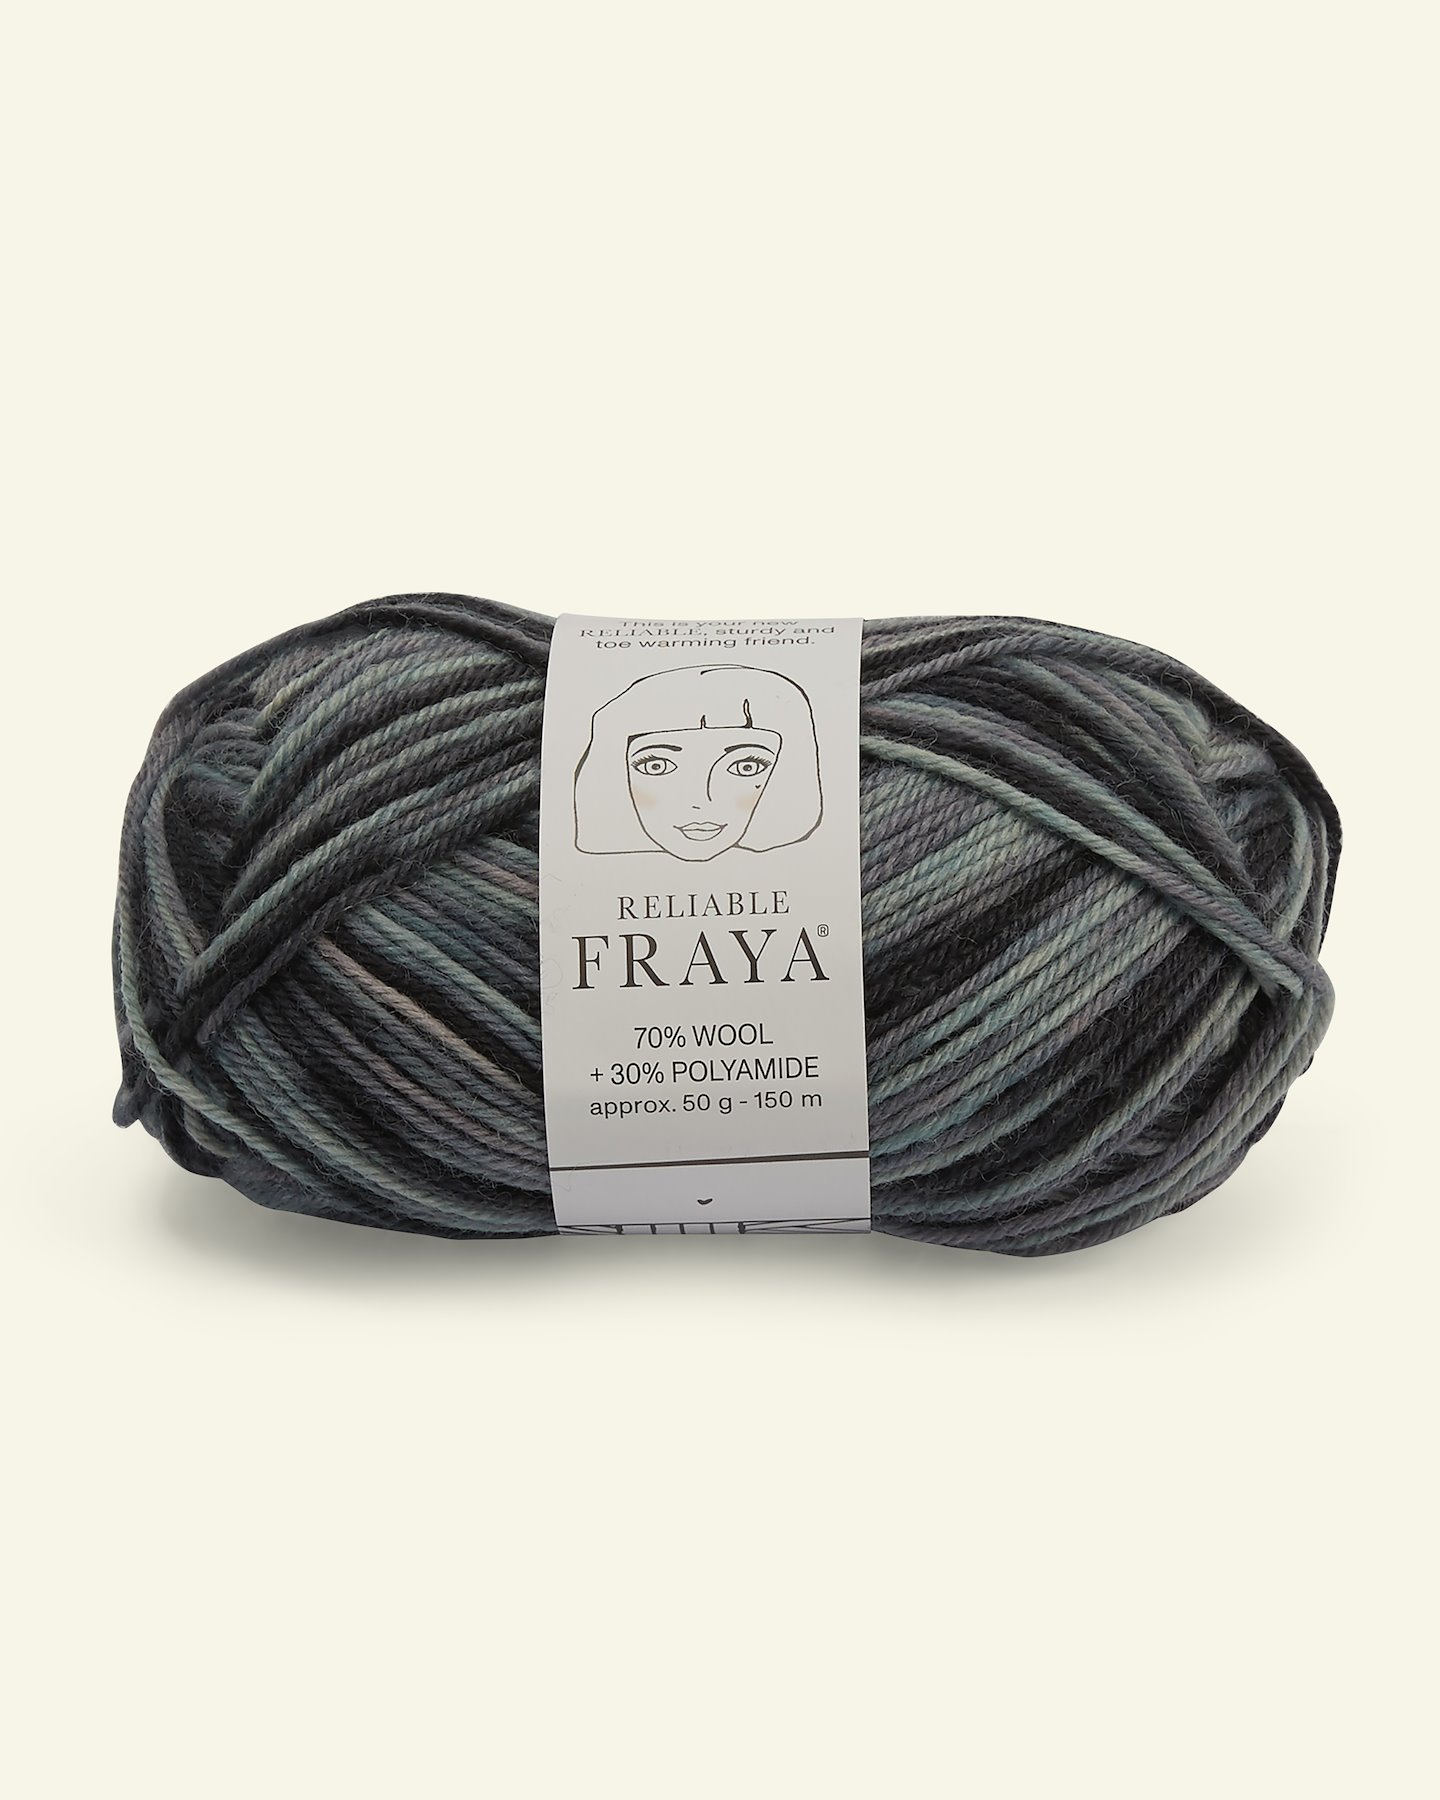 FRAYA, wool yarn "Reliable", grey/black mix col.  90001203_pack